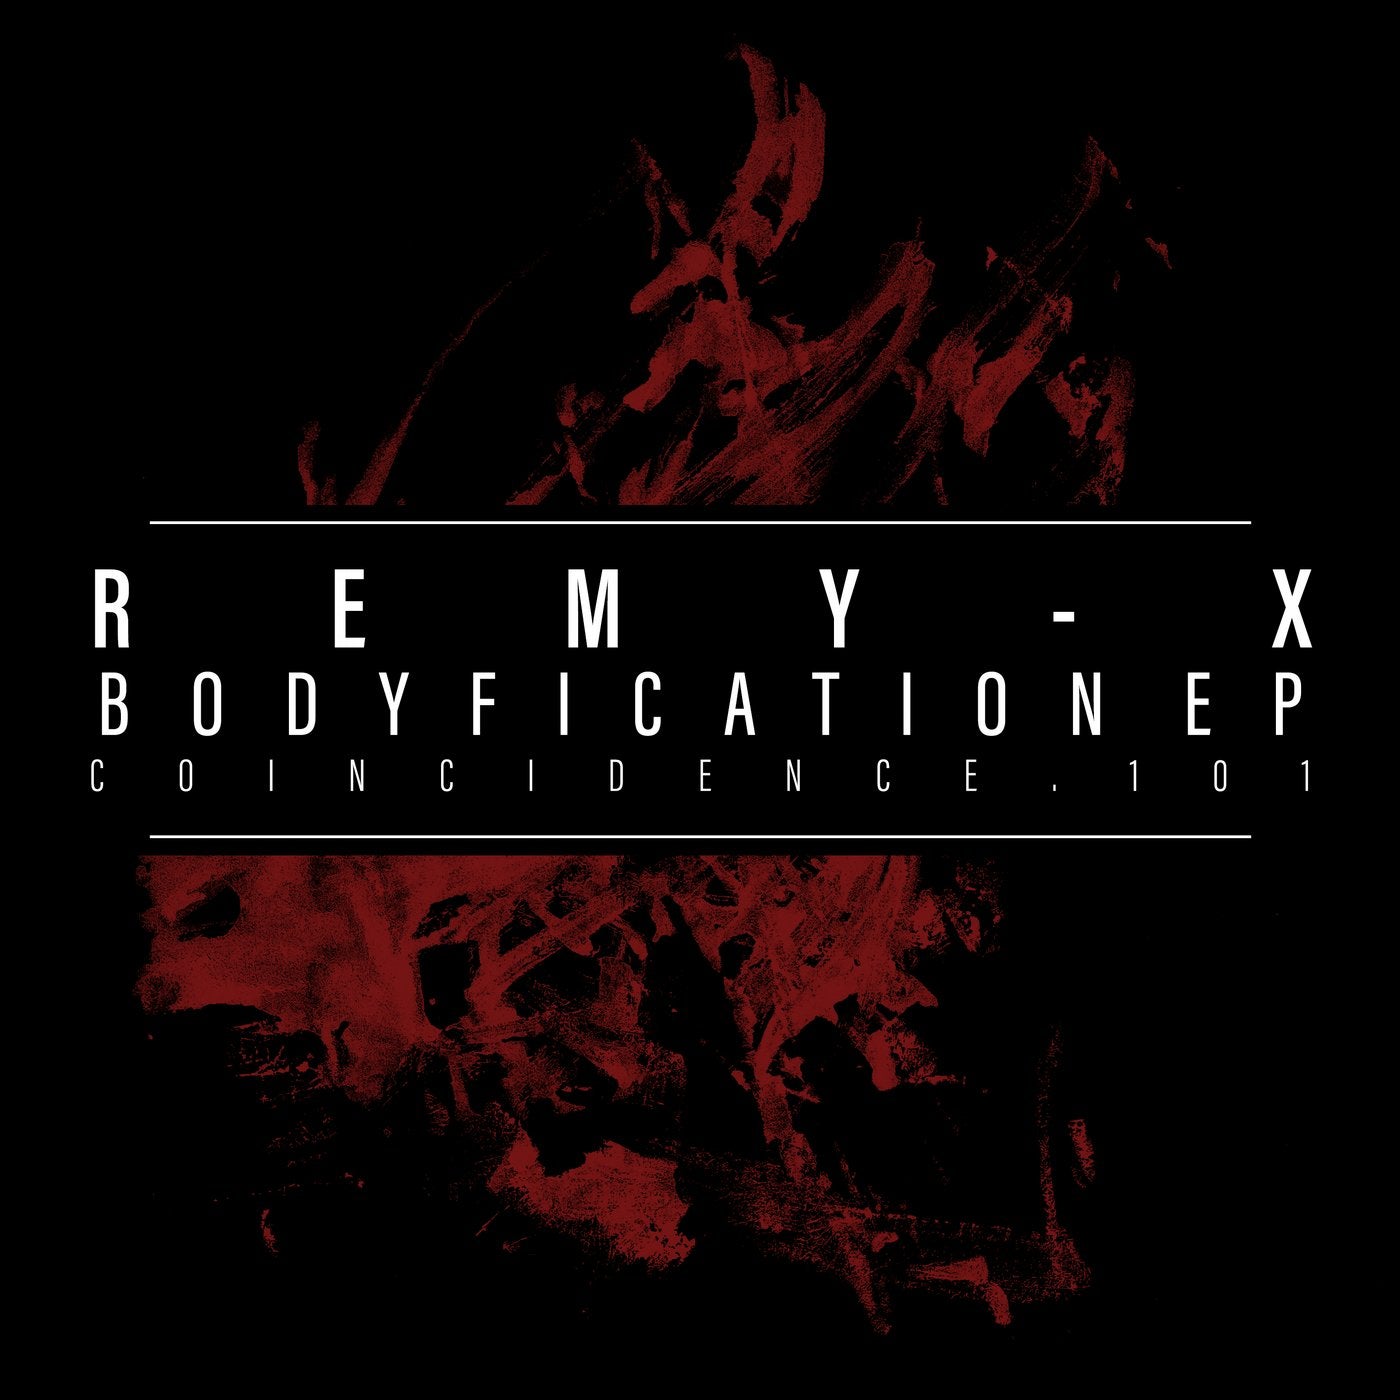 Bodyfication EP